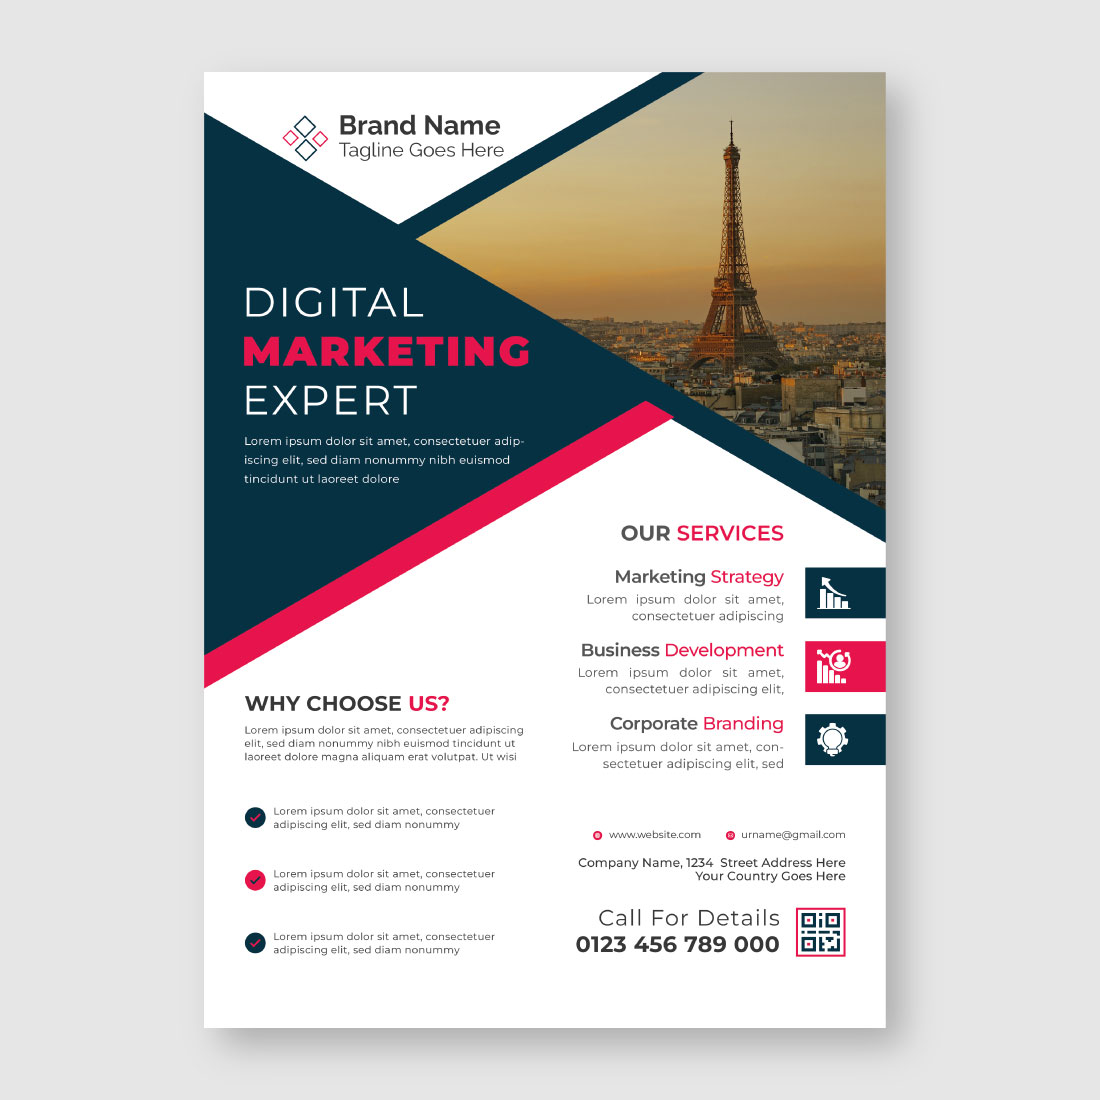 Flyer for a digital marketing expert.